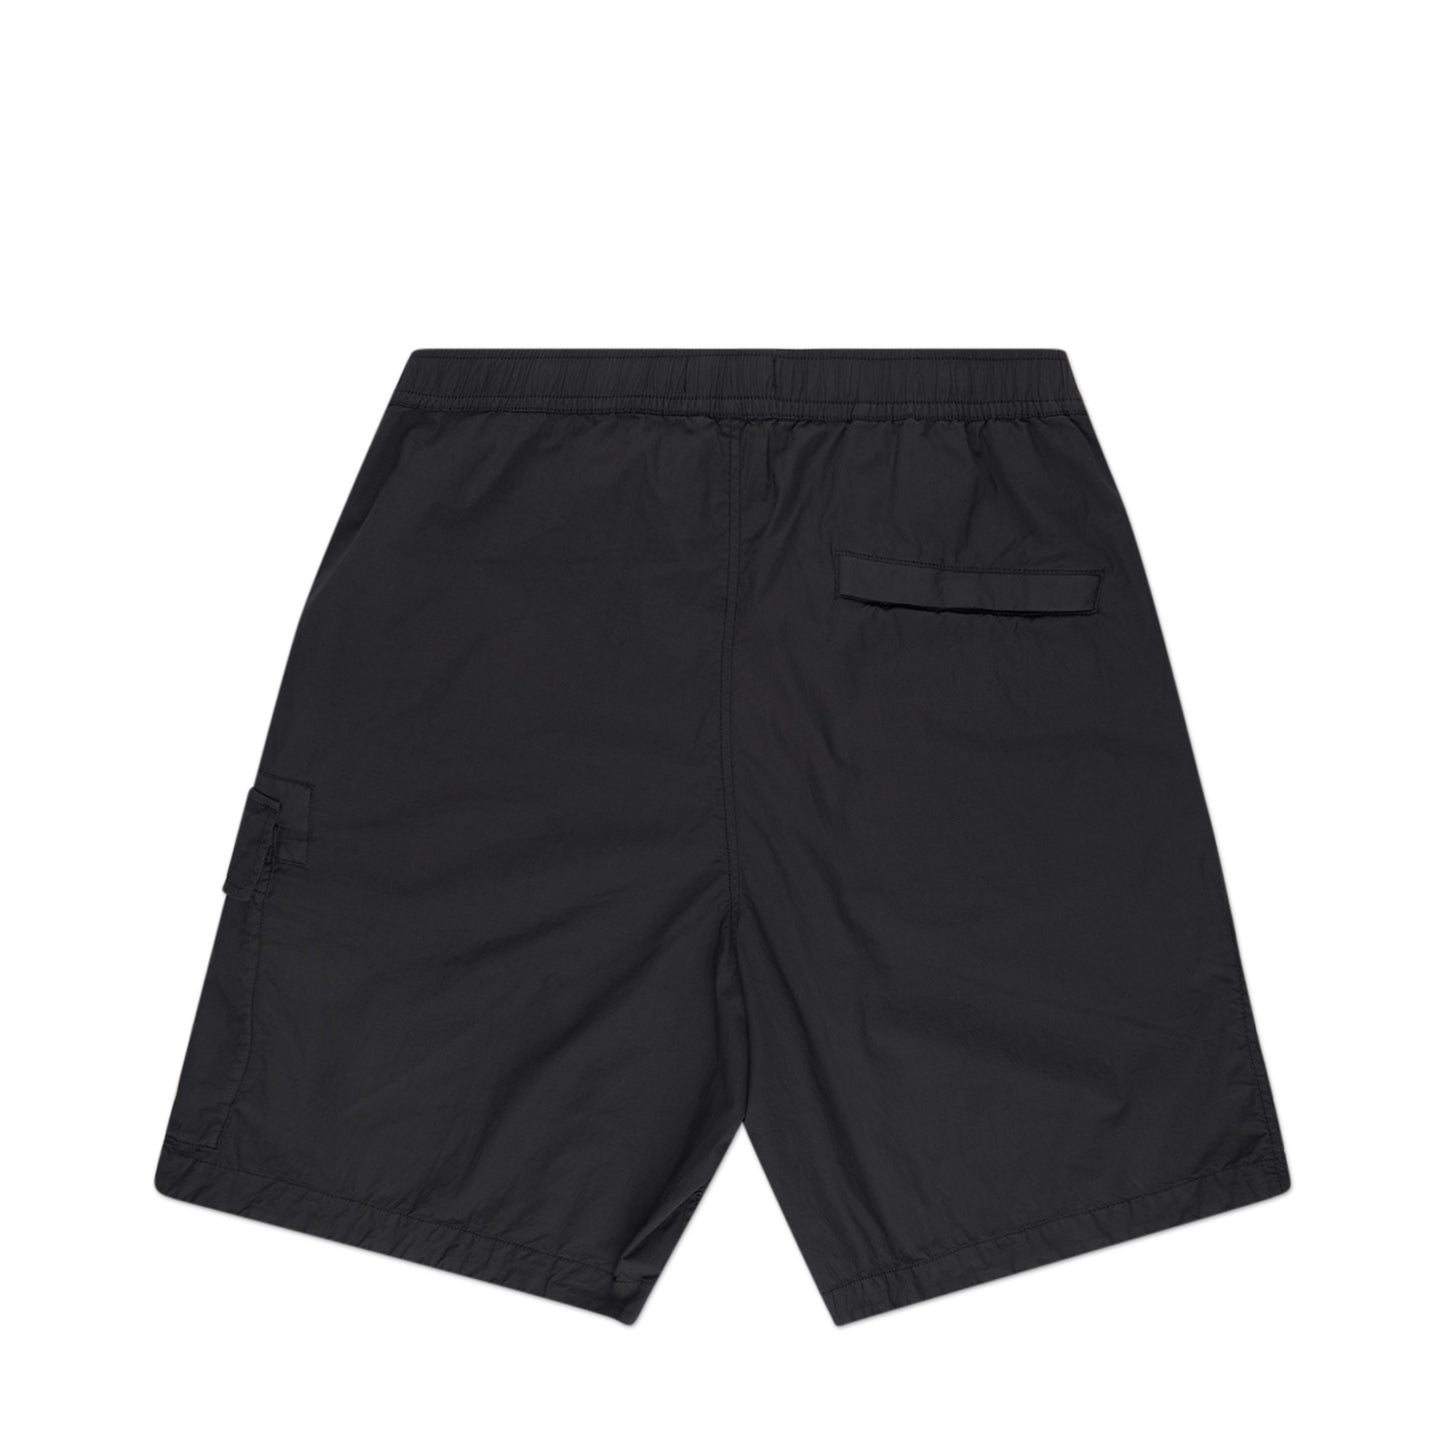 stone island bermuda  comfort shorts (charcoal)